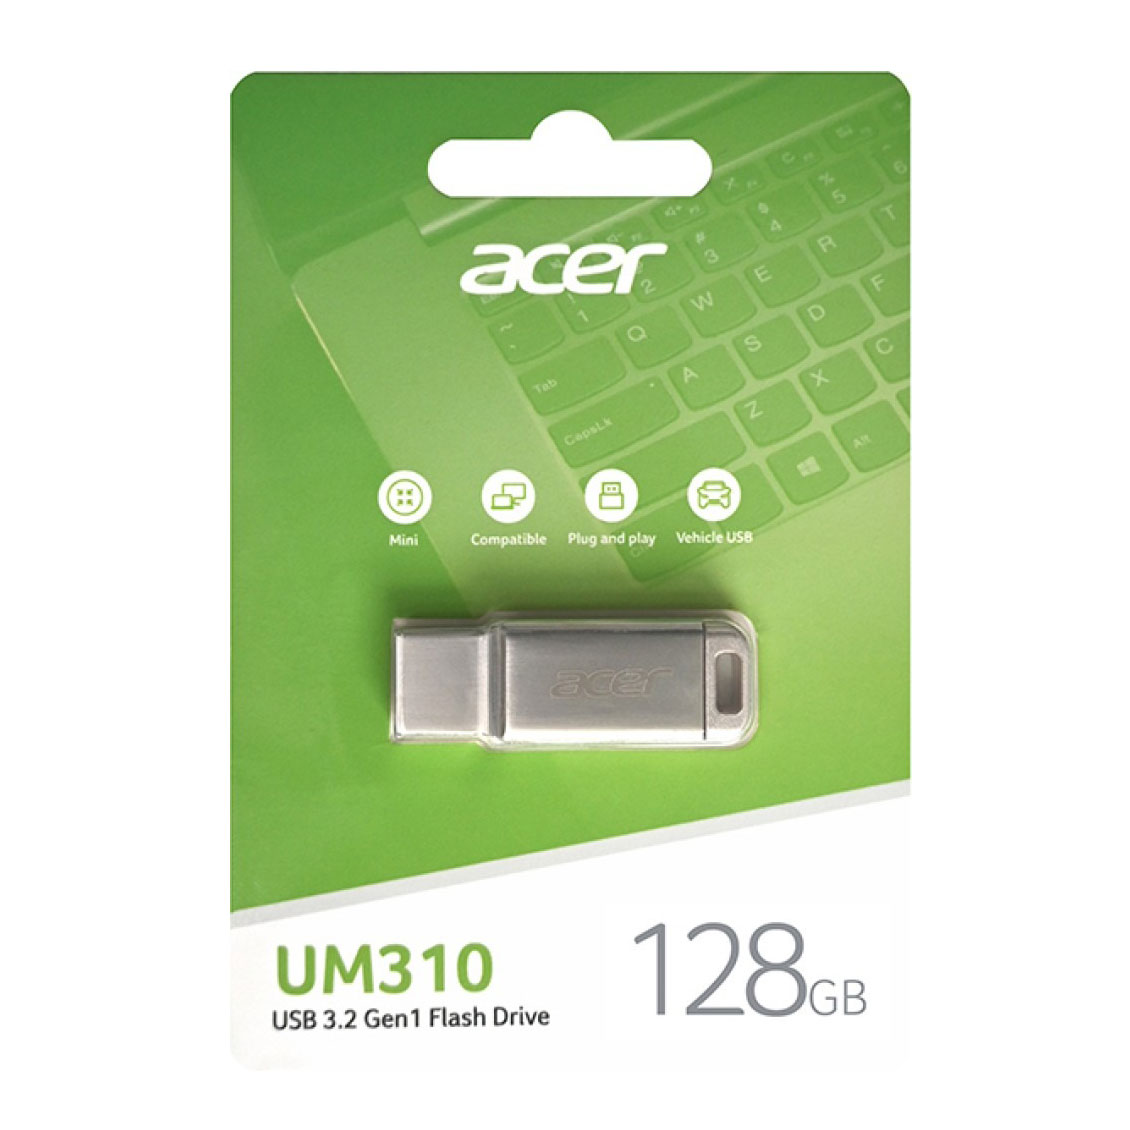 USB Acer UM310 128GB USB 3.2 - Vỏ kim loại